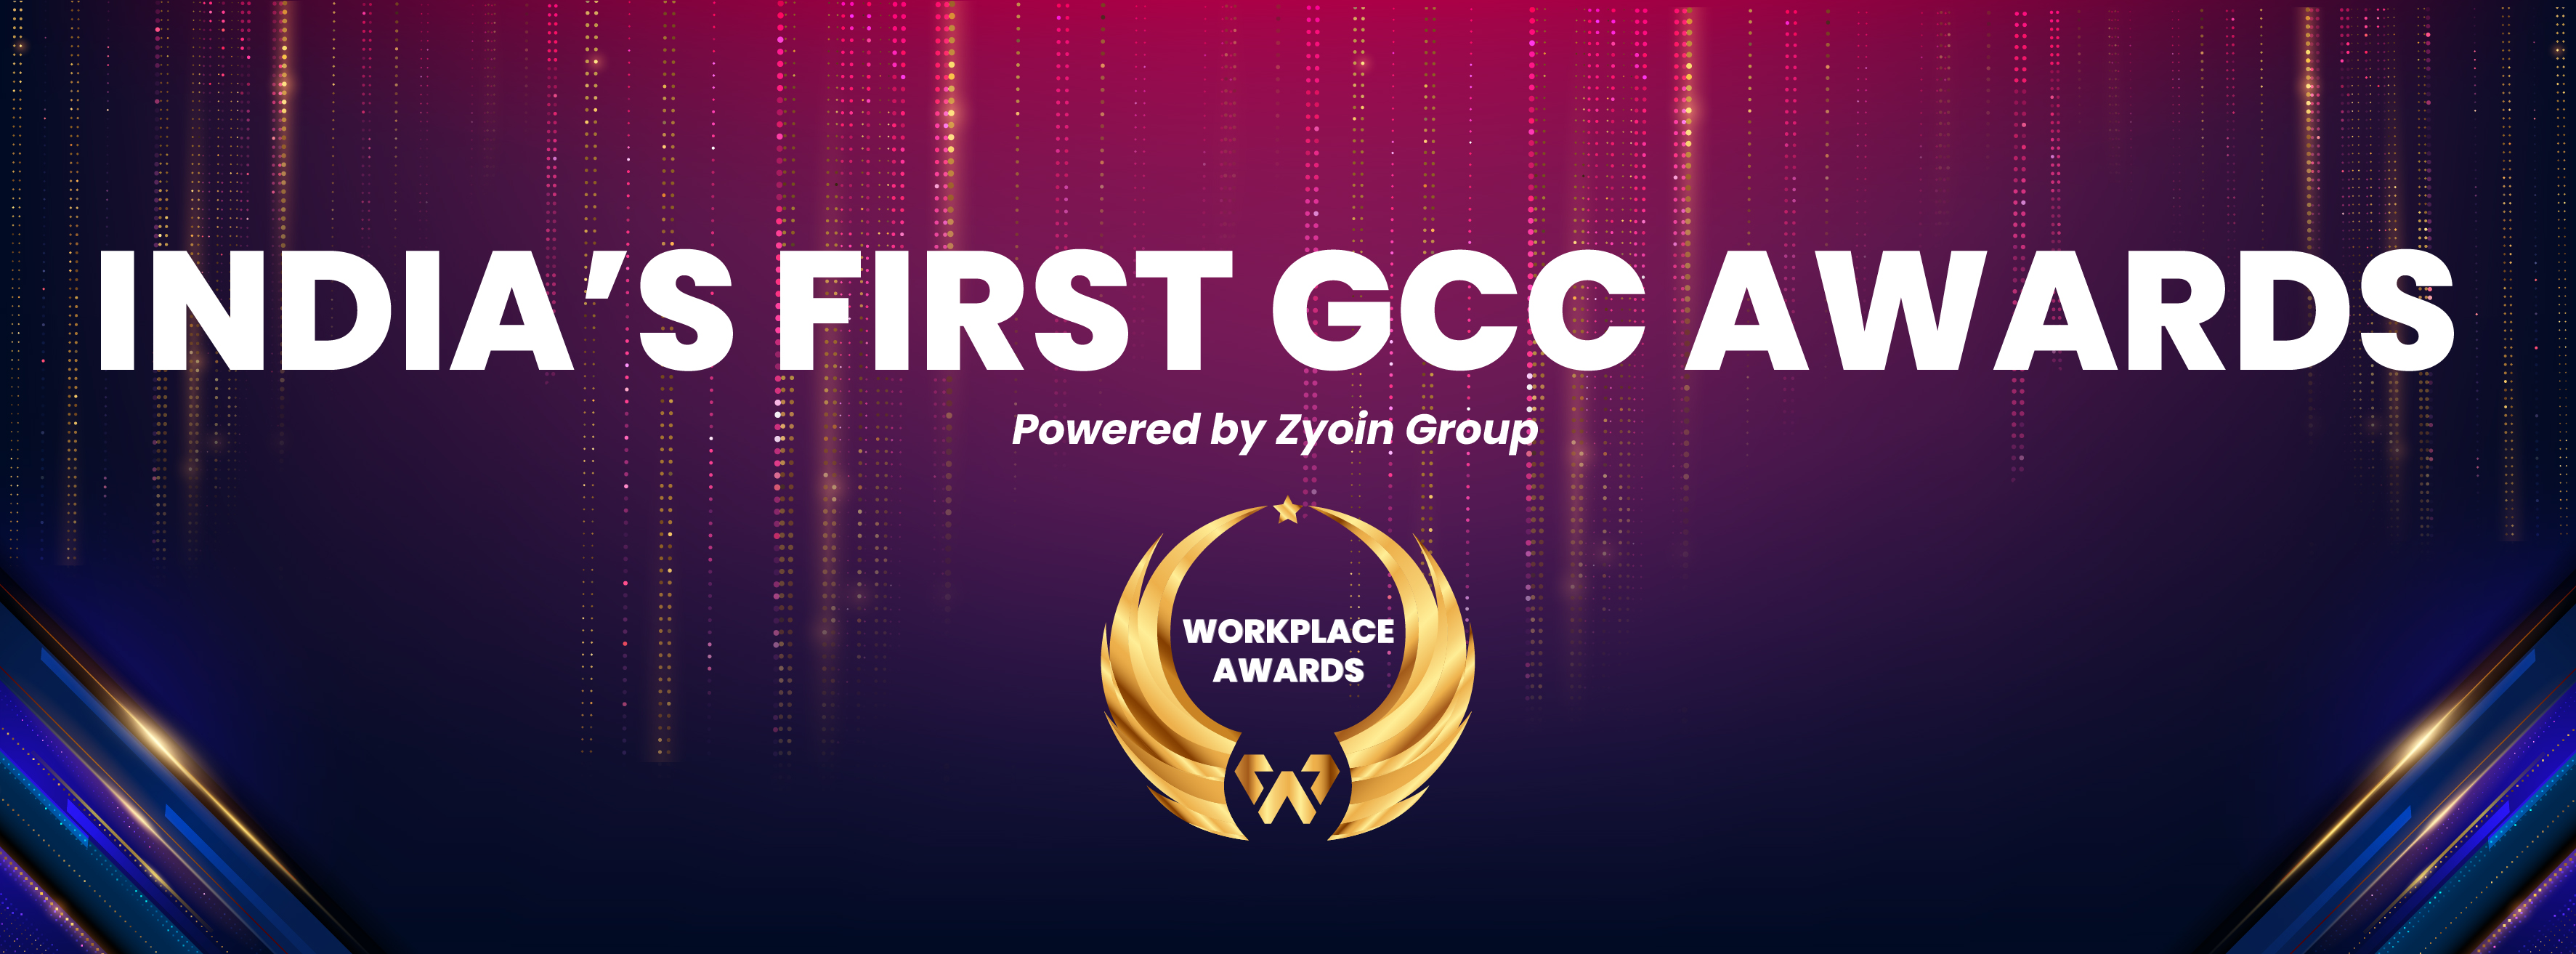 GCC Workplace Awards, Bangalore, Karnataka, India